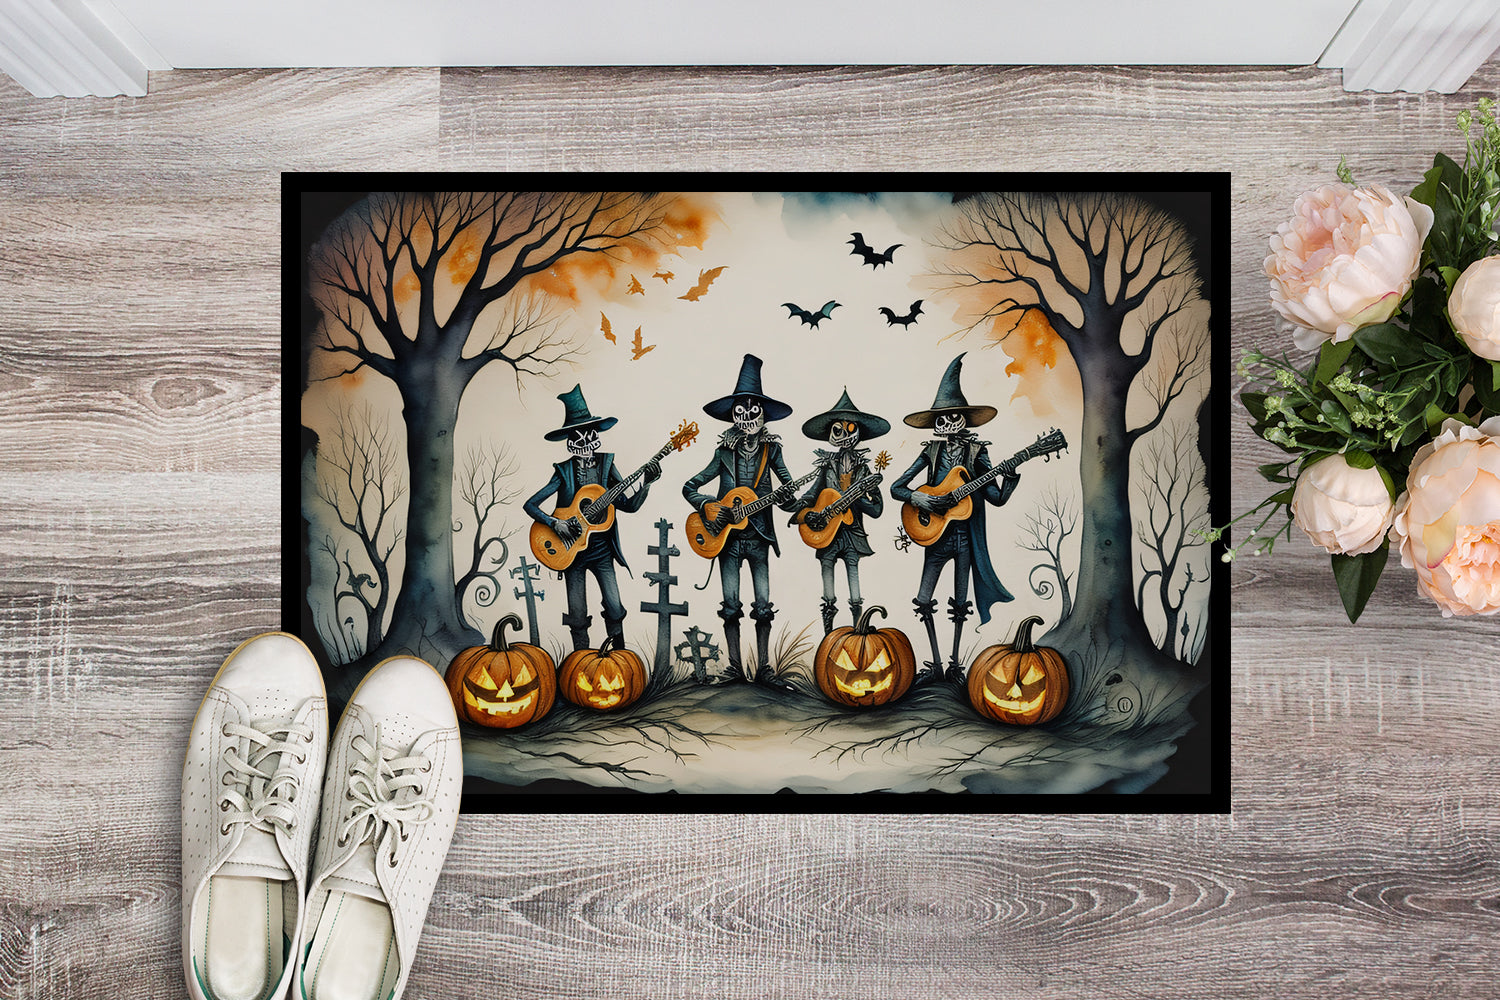 Mariachi Skeleton Band Spooky Halloween Doormat 18x27  the-store.com.